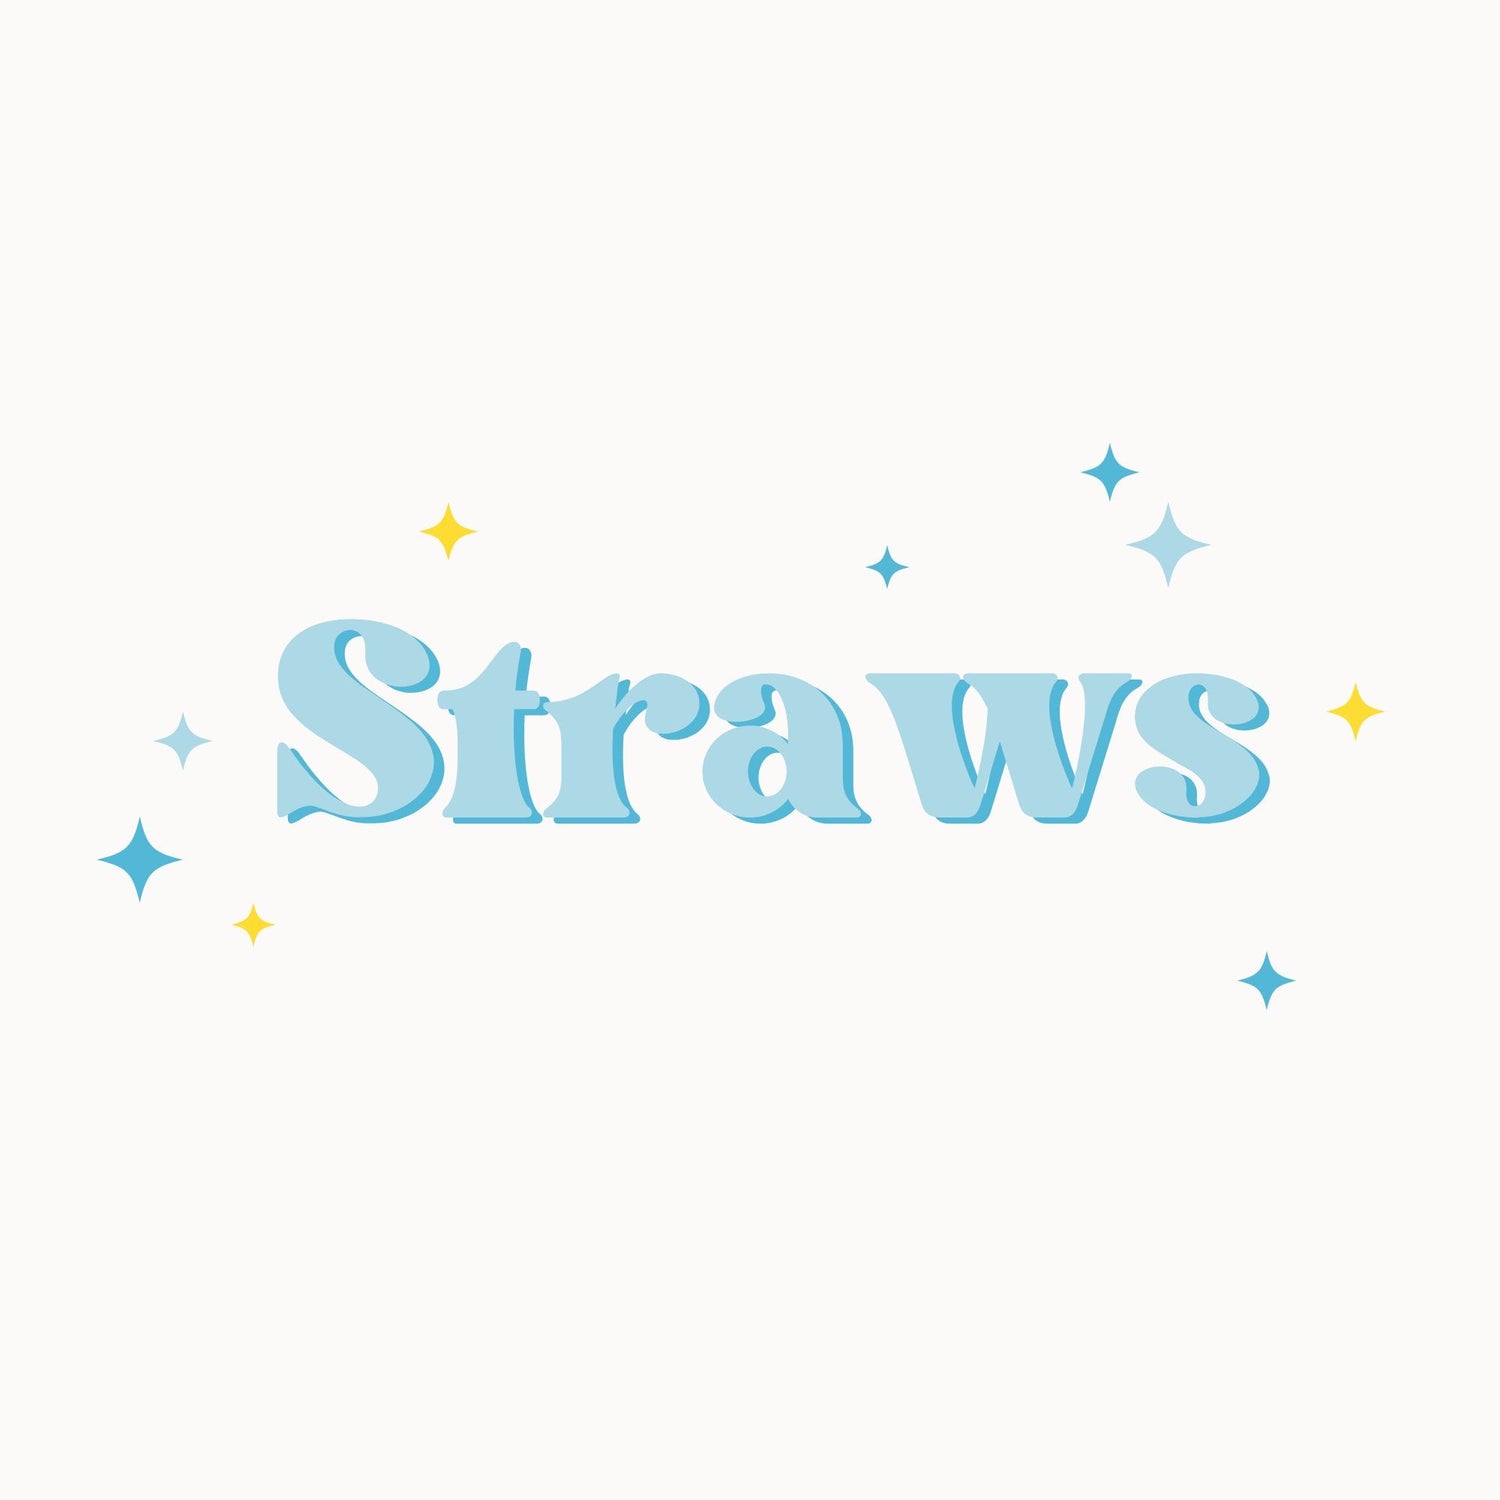 Straws, Text